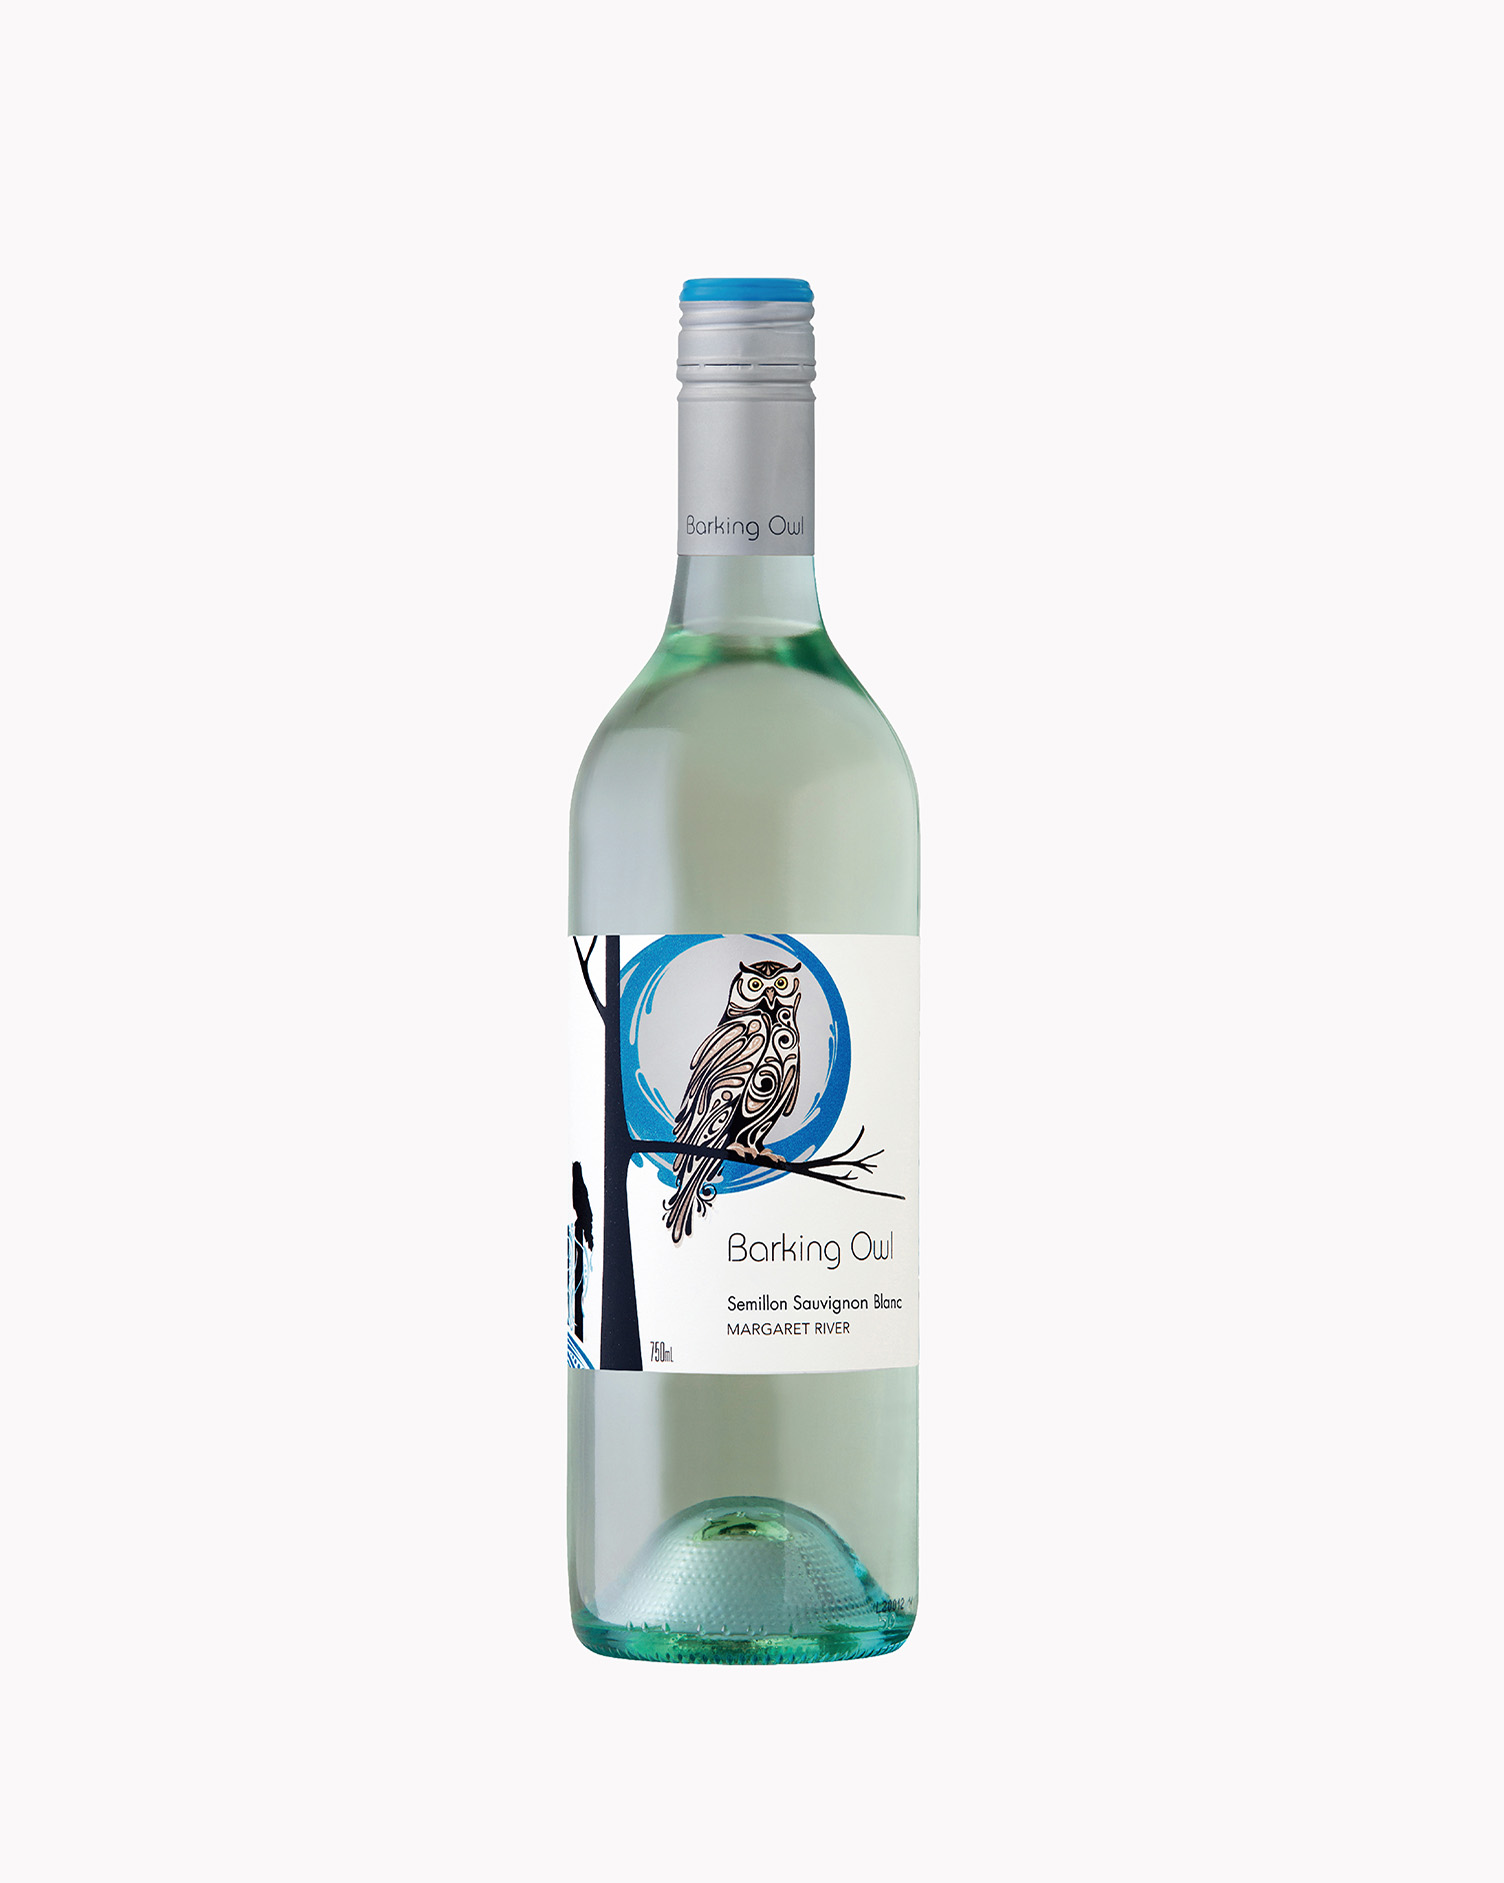 http://www.wineandspice.com.cn/img/2019-08-01-ryWRjRxyQI.jpg